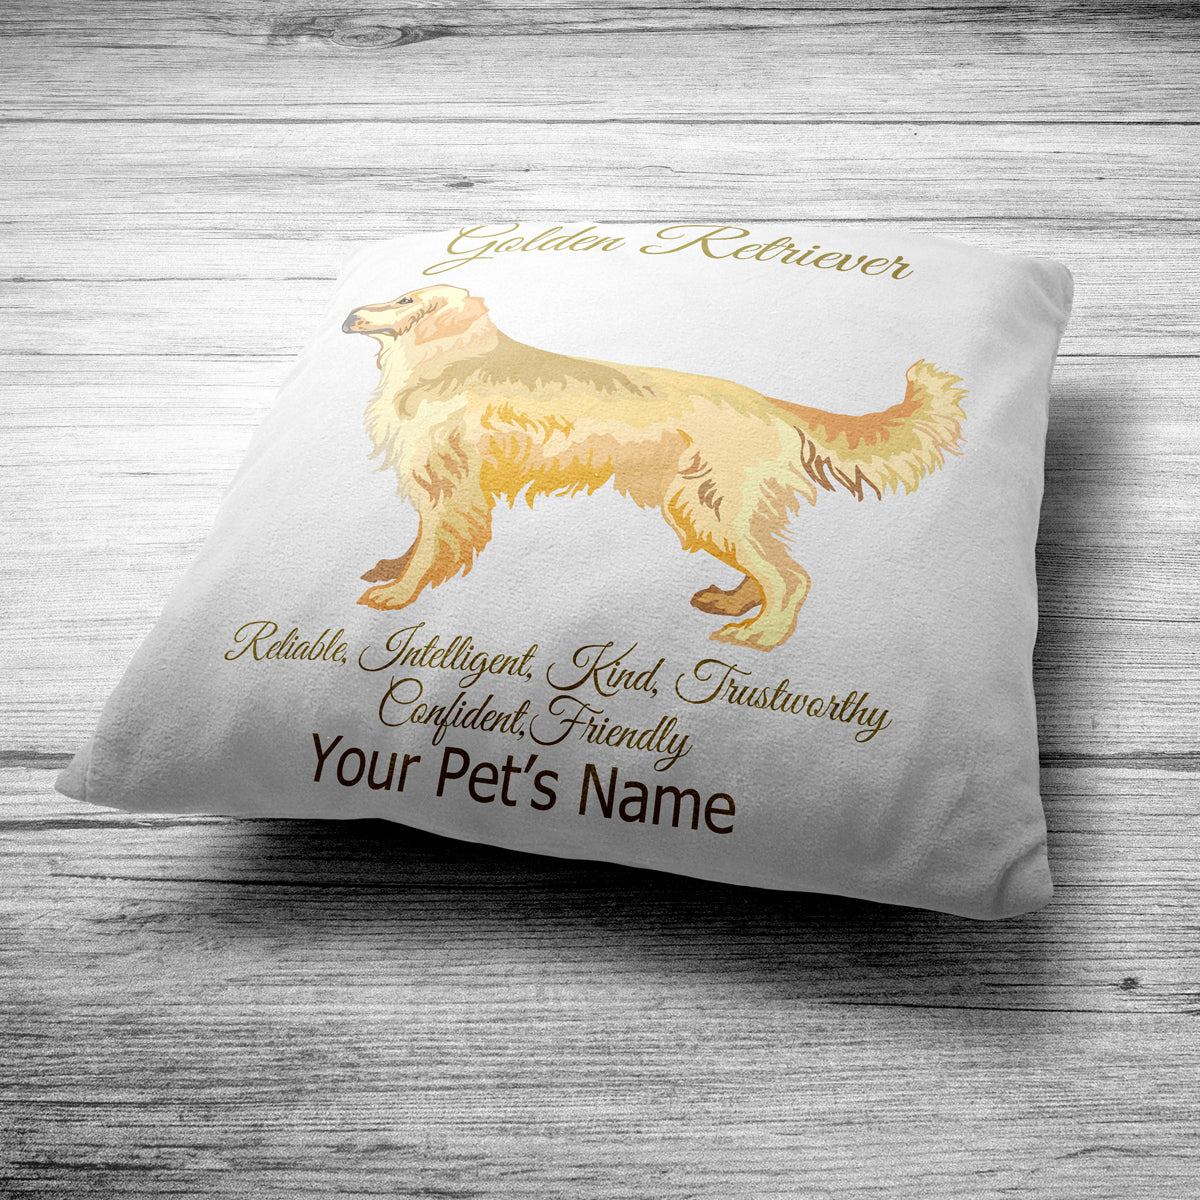 Personalised Golden Retriever Cushion